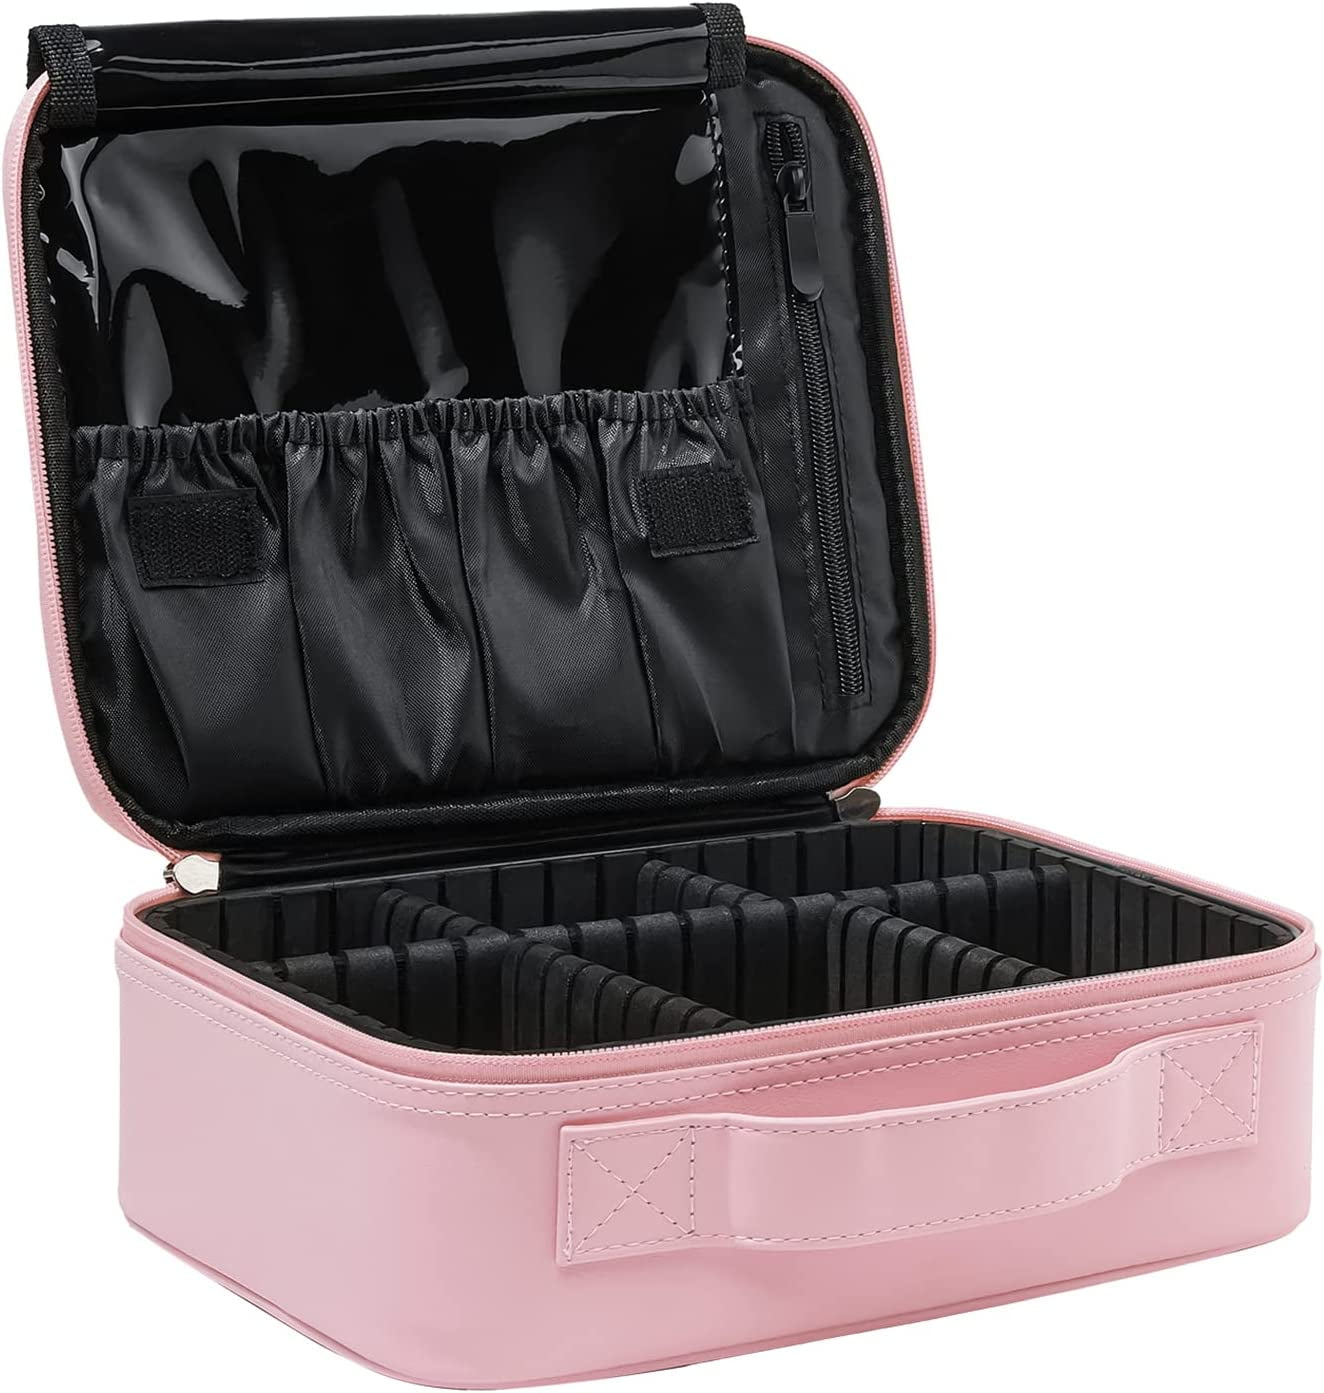 Pink Makeup Bag, Makeup Bags for Women, Makeup Bag with Mirror, Travel  Makeup Train Case, Makeup Organizer Bag, Adjustable Dividers & Support  Straps